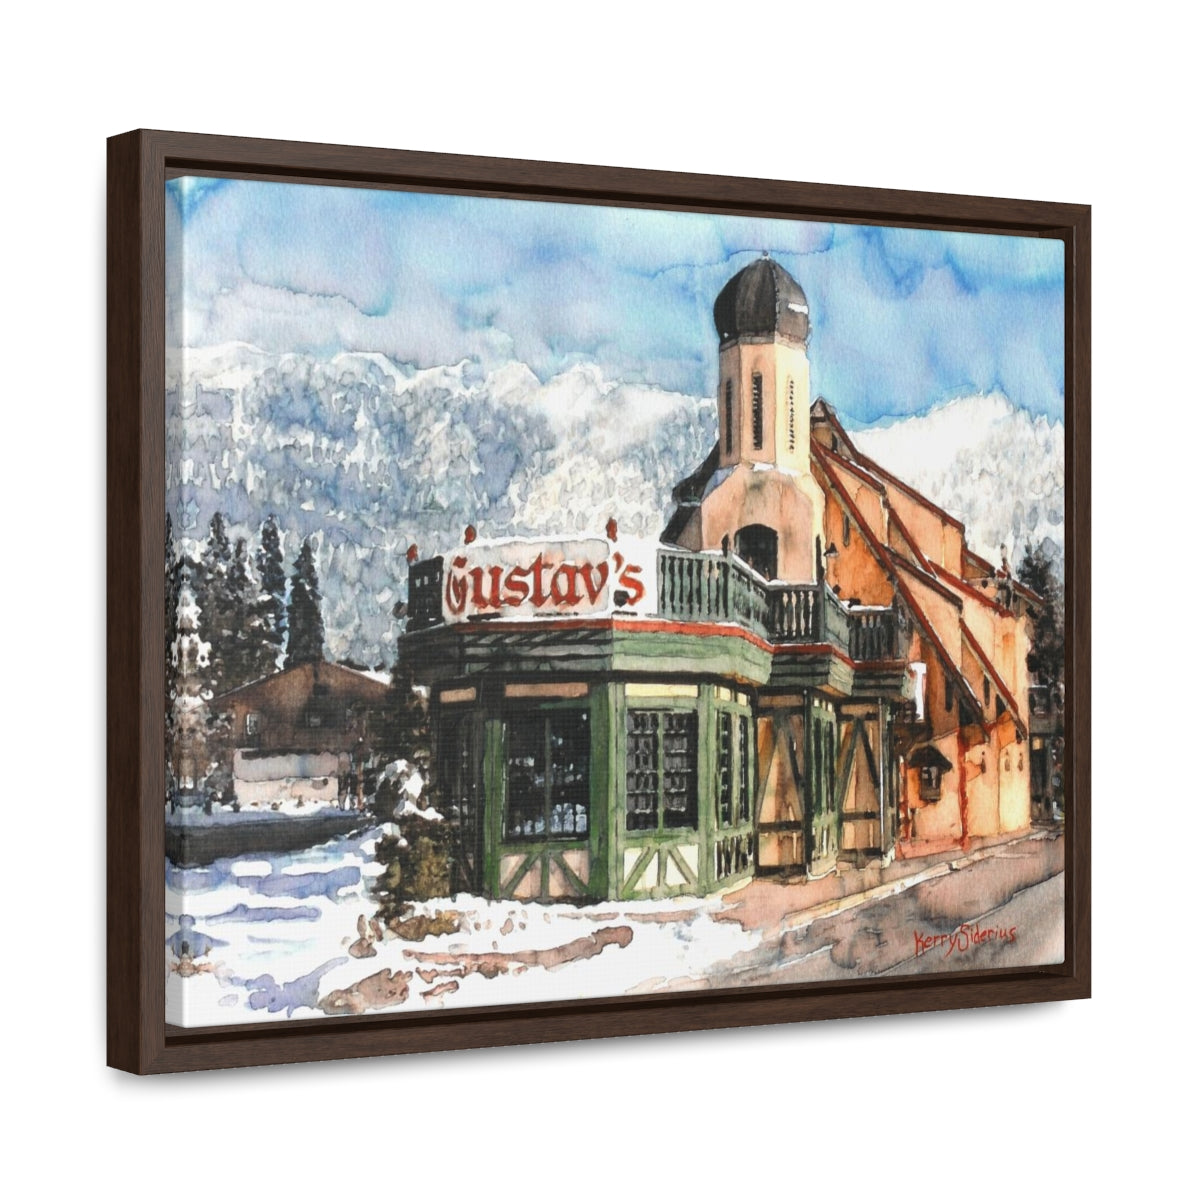 "Leavenworth's Gustav's in the Wintertime" Poplar Wood Framed Canvas - Kerry Siderius Art 